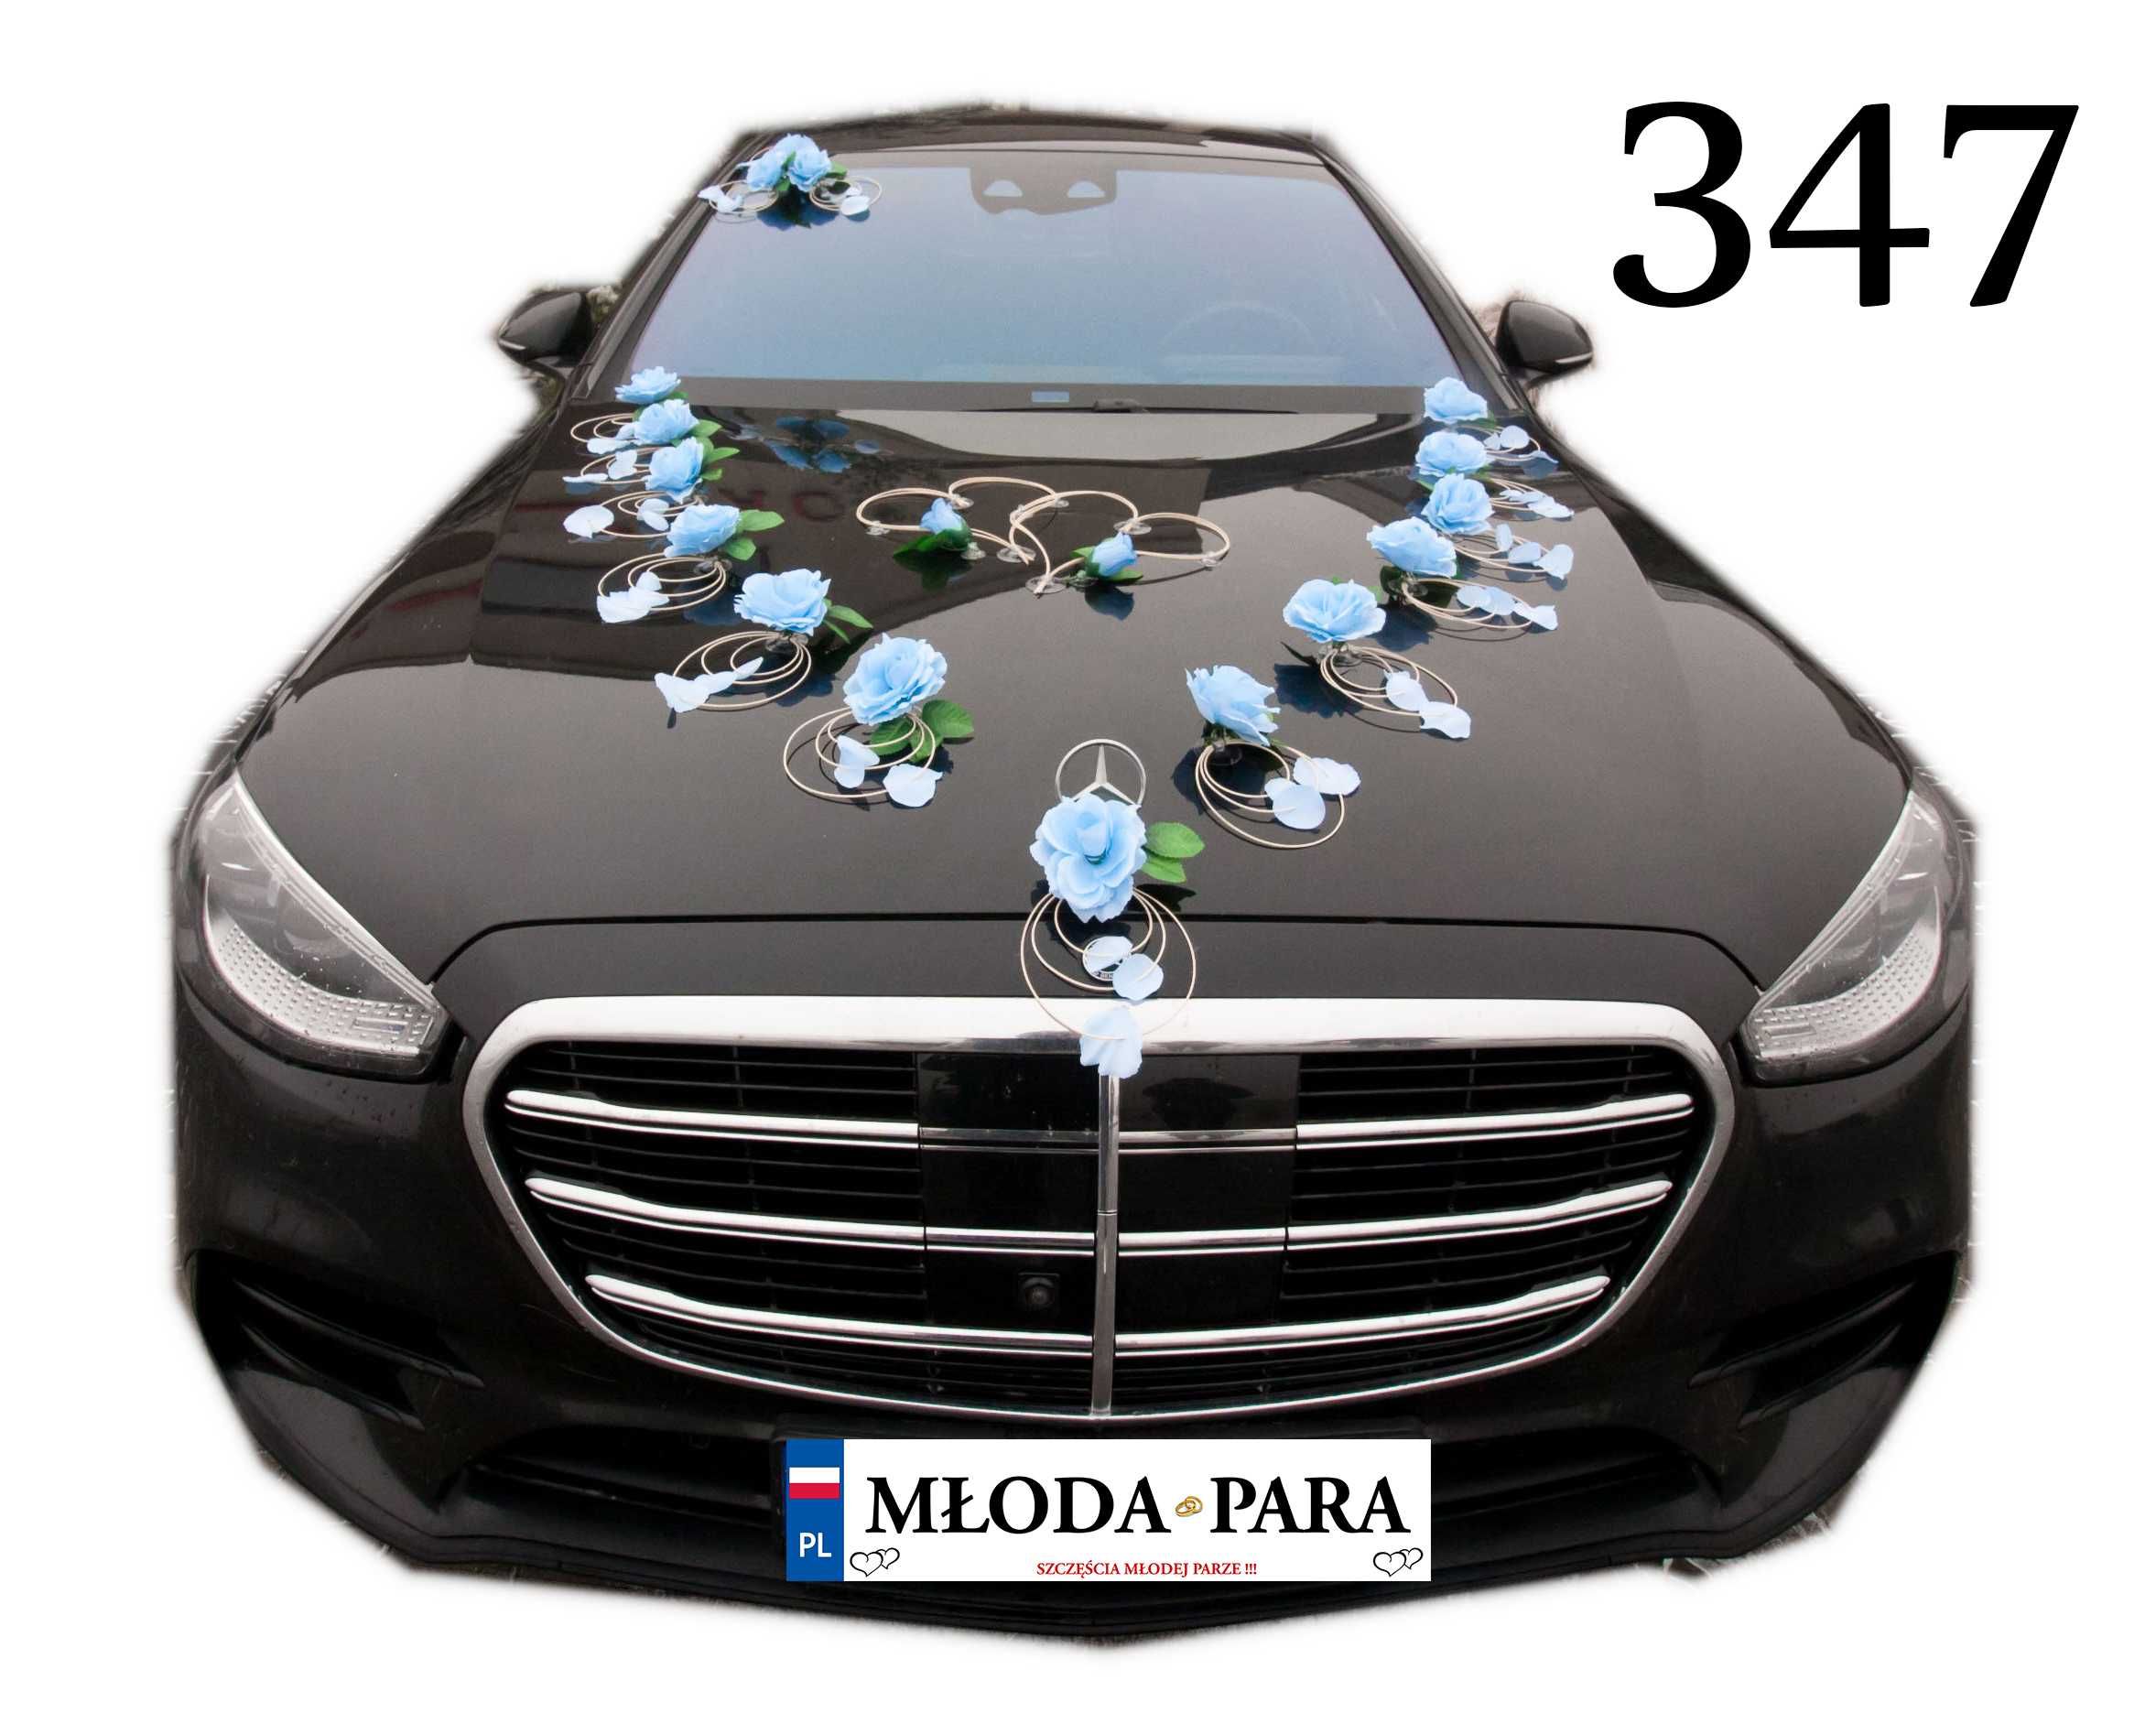 BOGATA dekoracja na samochód ślubny ozdoby na auto KOLORY 347